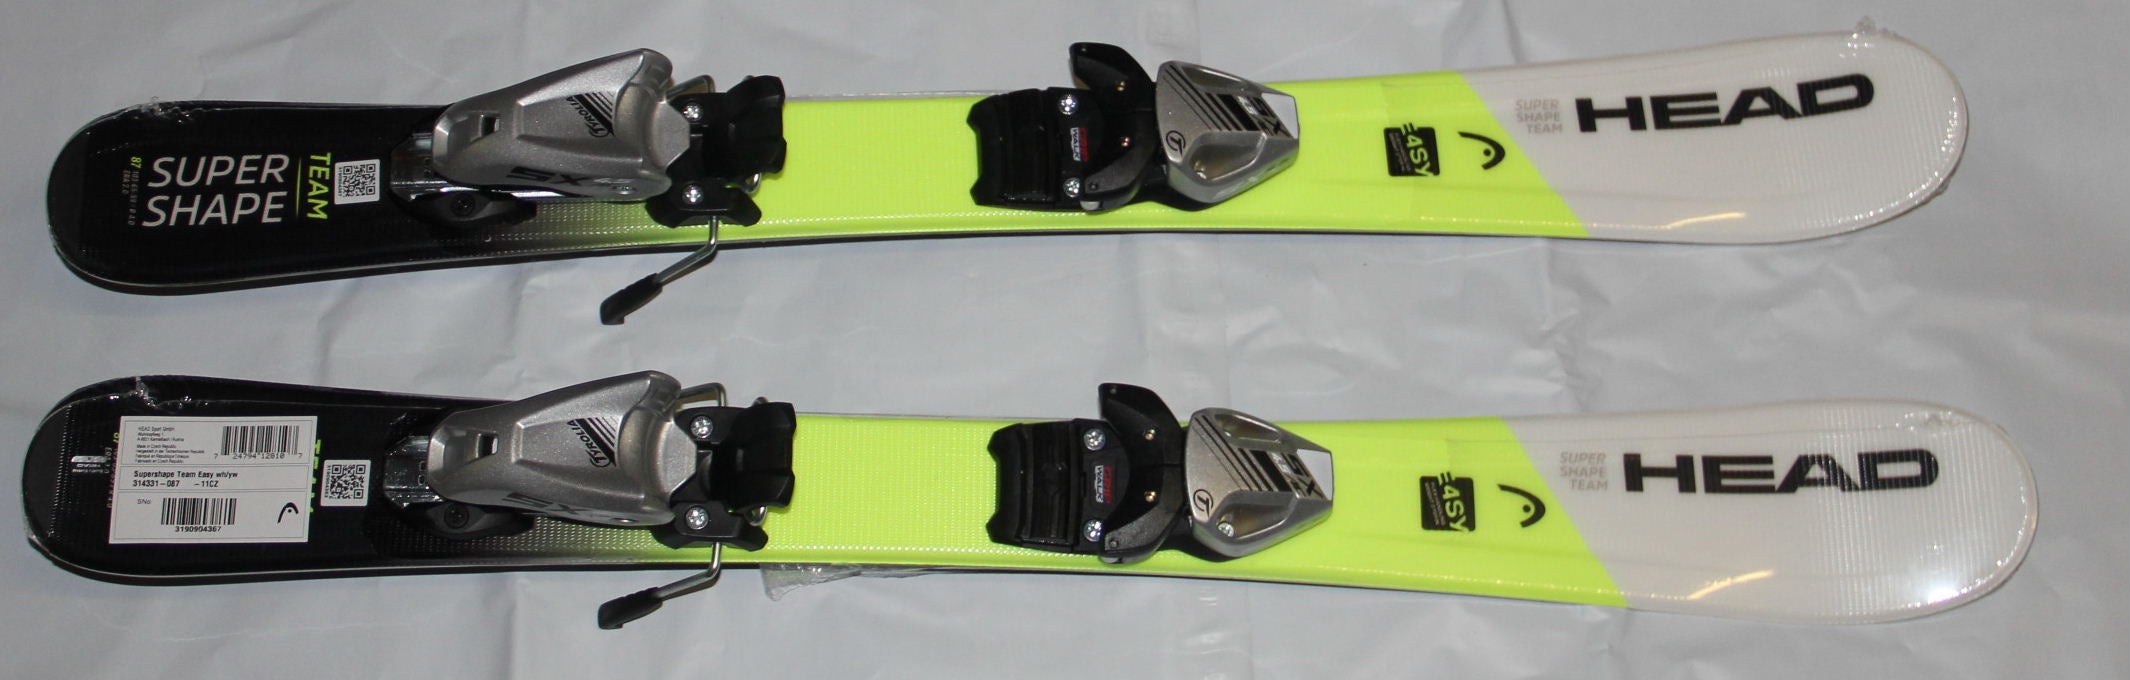 NEW 87cm HEAD Supershape team Easy kids skis 87cm + adjustable bindings SX4.5